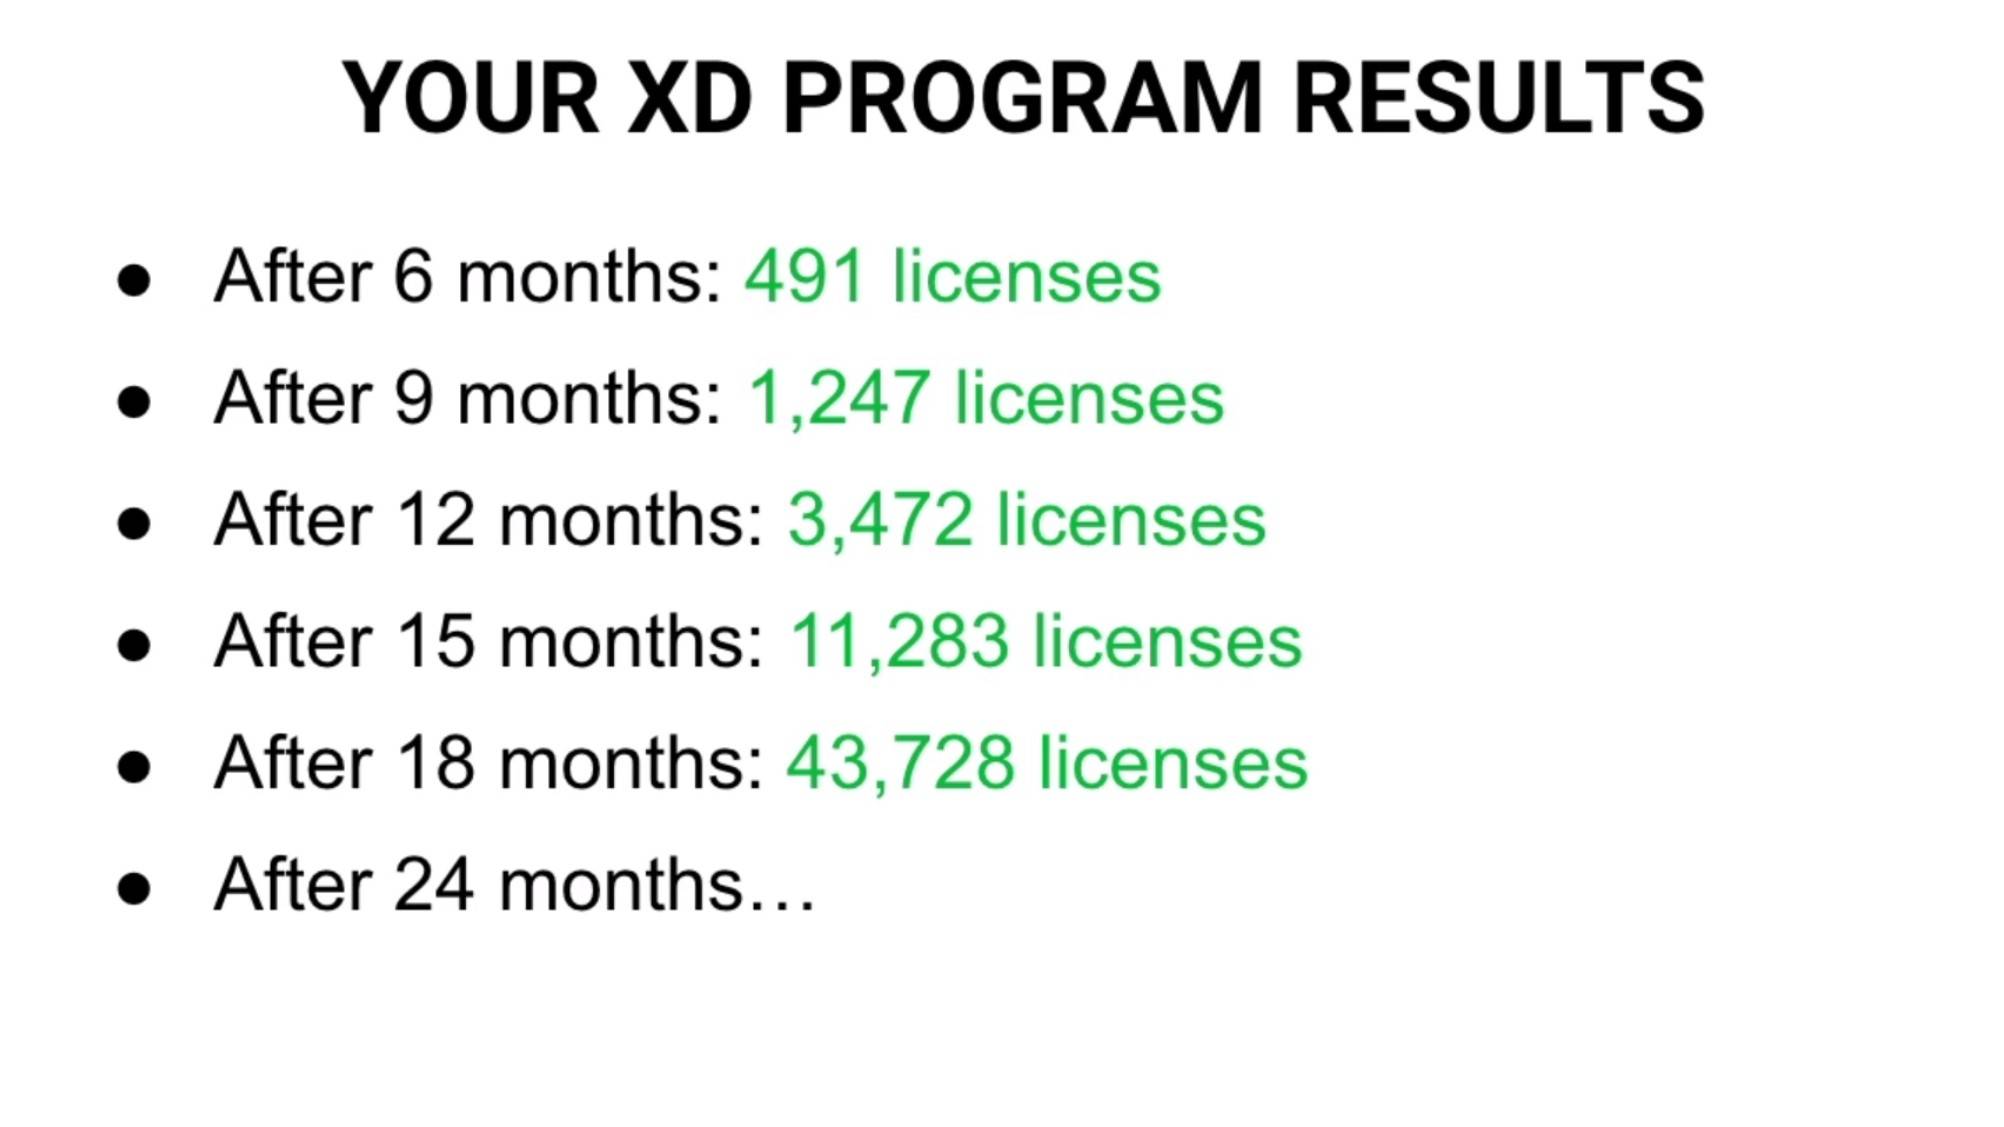 xD Program Results per Month